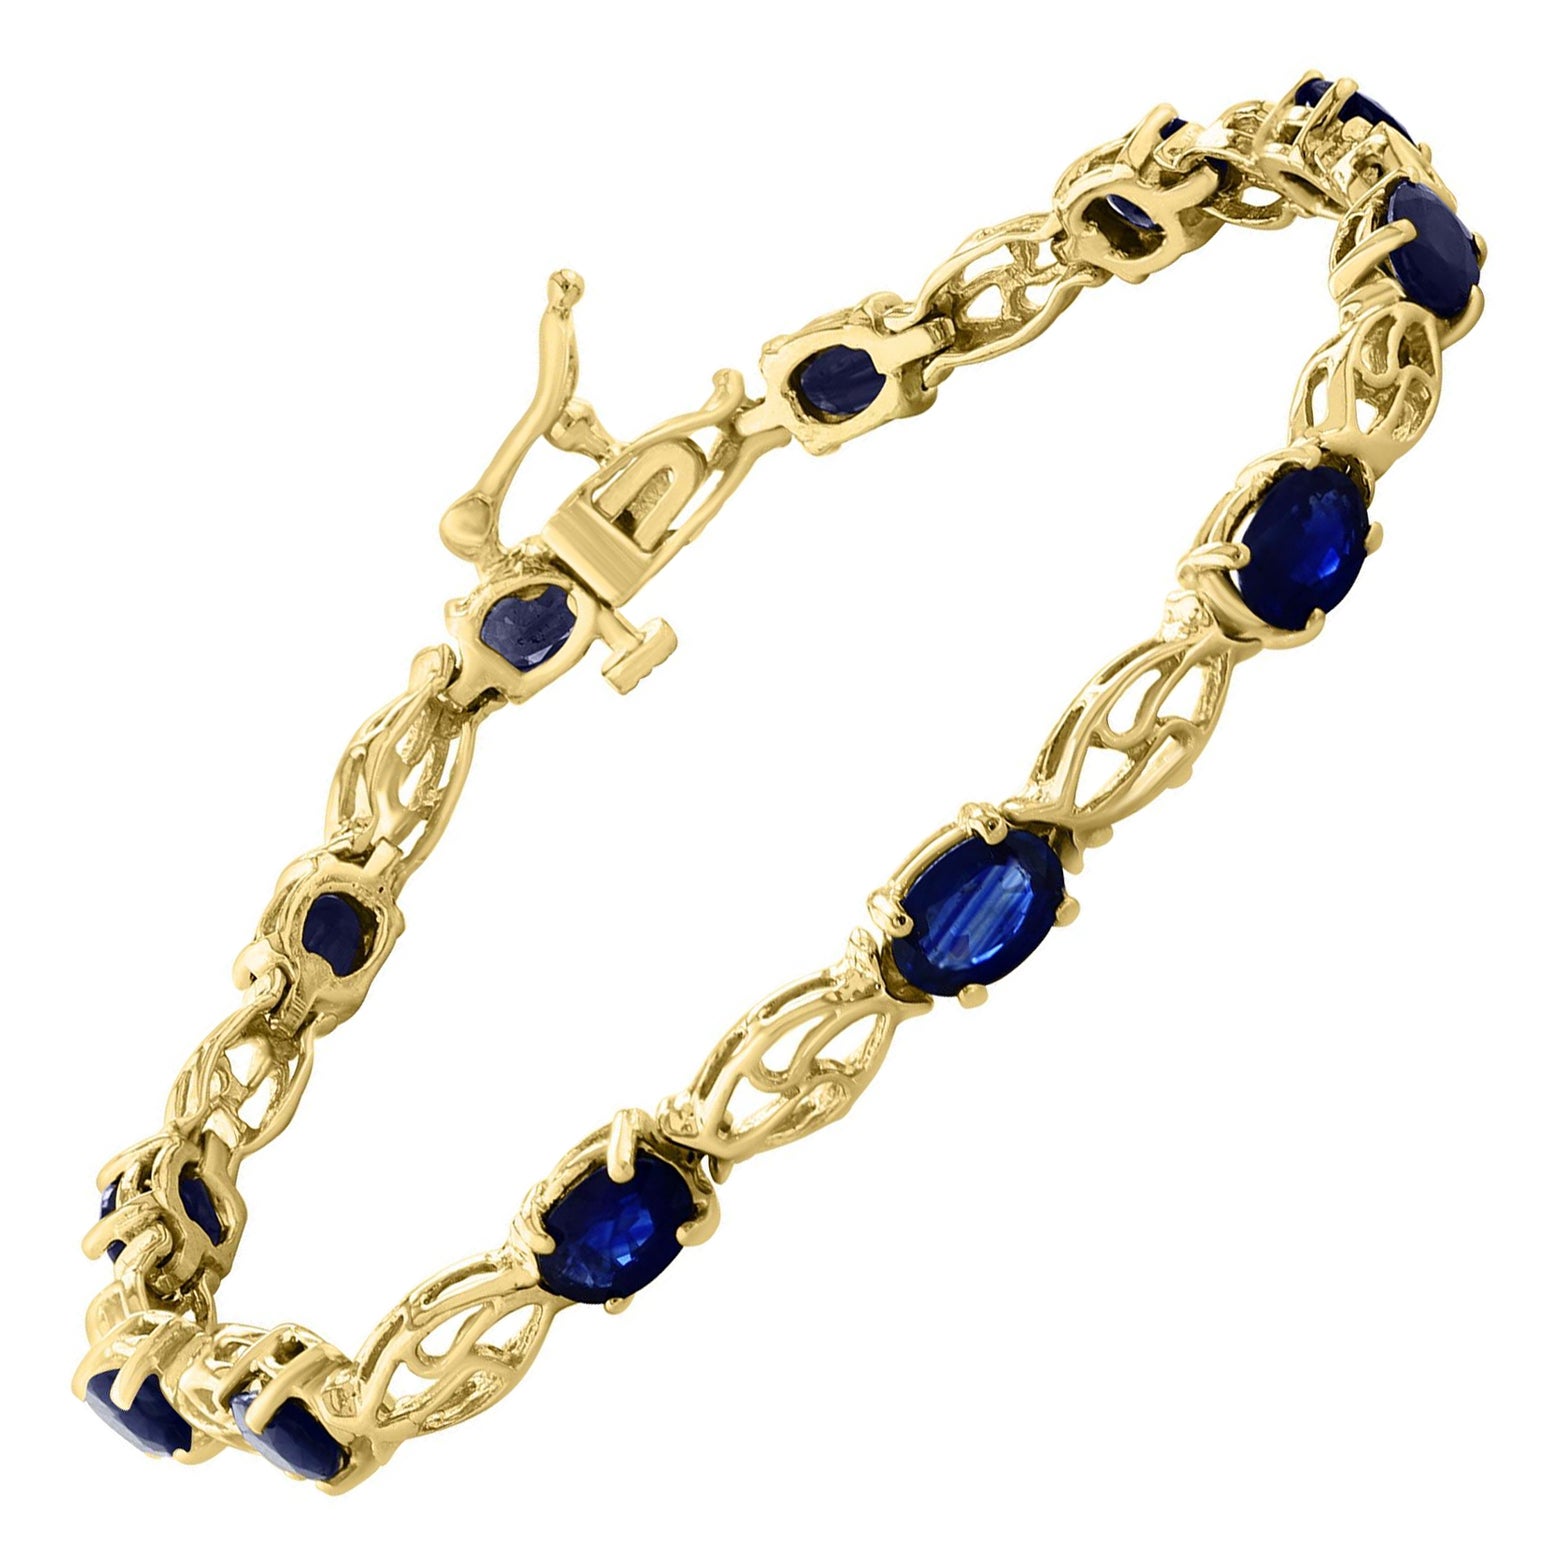 8Ct Natural Oval Blue Sapphire Tennis Bracelet 14 Karat Yellow Gold, 7 Inch Long For Sale